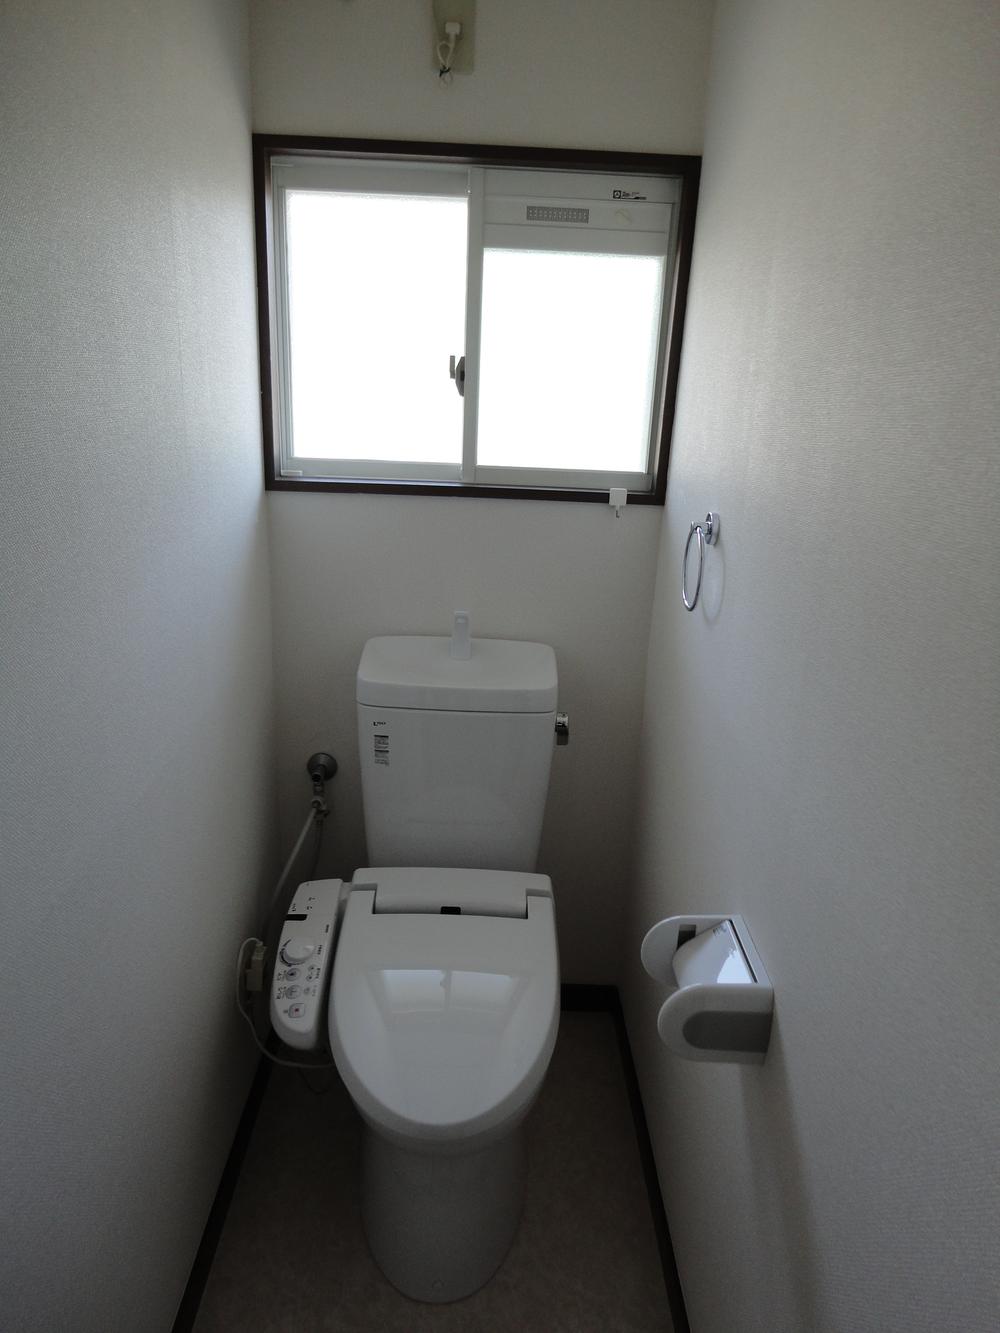 Toilet. Second floor (April 2013) Shooting